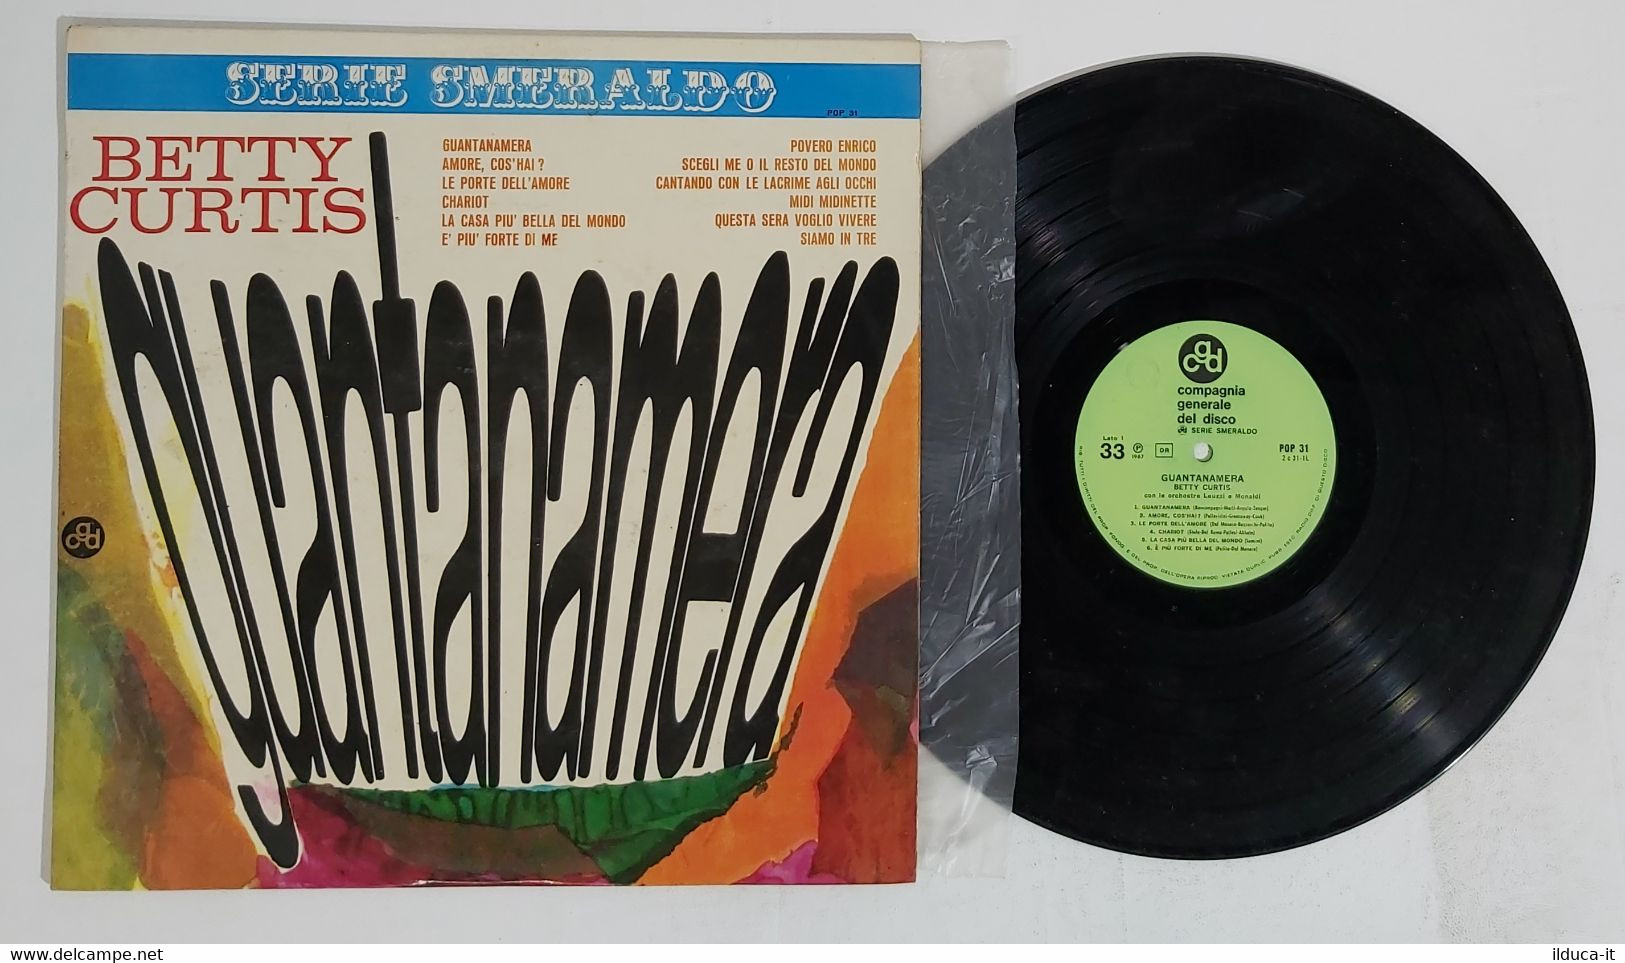 I104172 LP 33 Giri - Betty Curtis - Guantanamera - CGD Serie Smeraldo 1967 - Autres - Musique Italienne